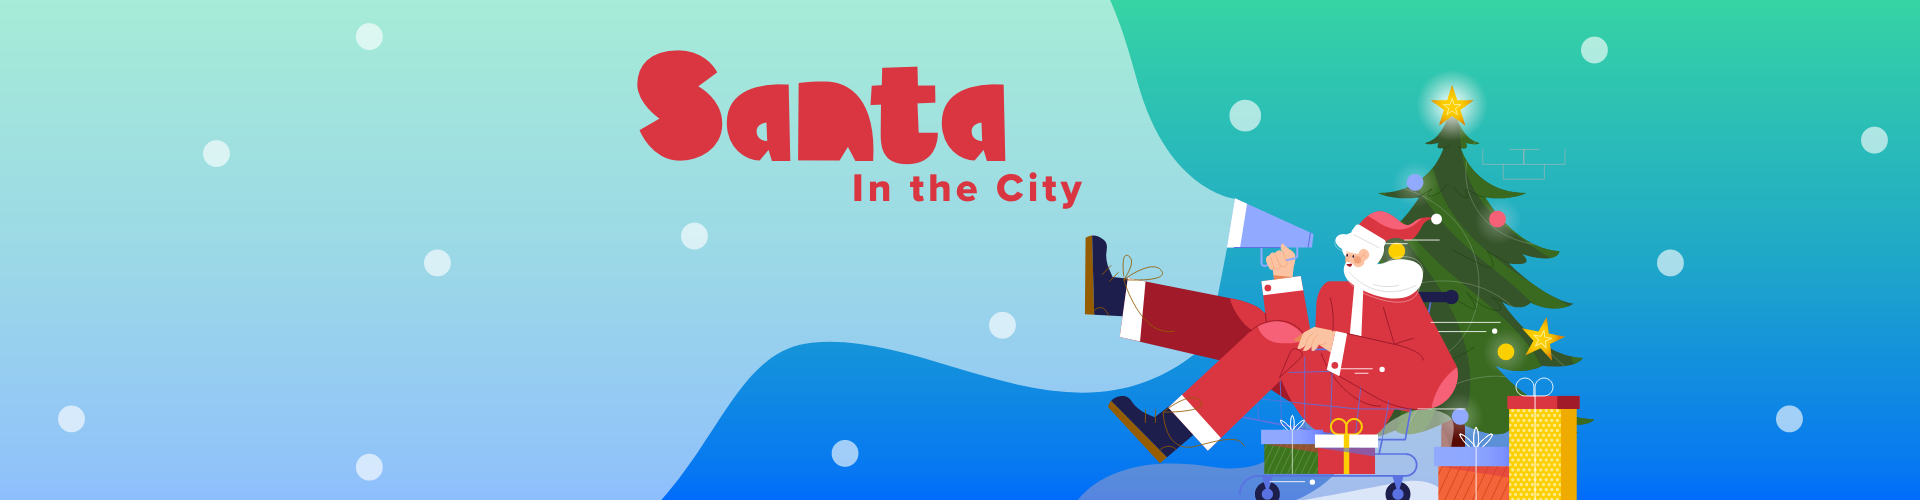 Illustration of Santa with a megaphone